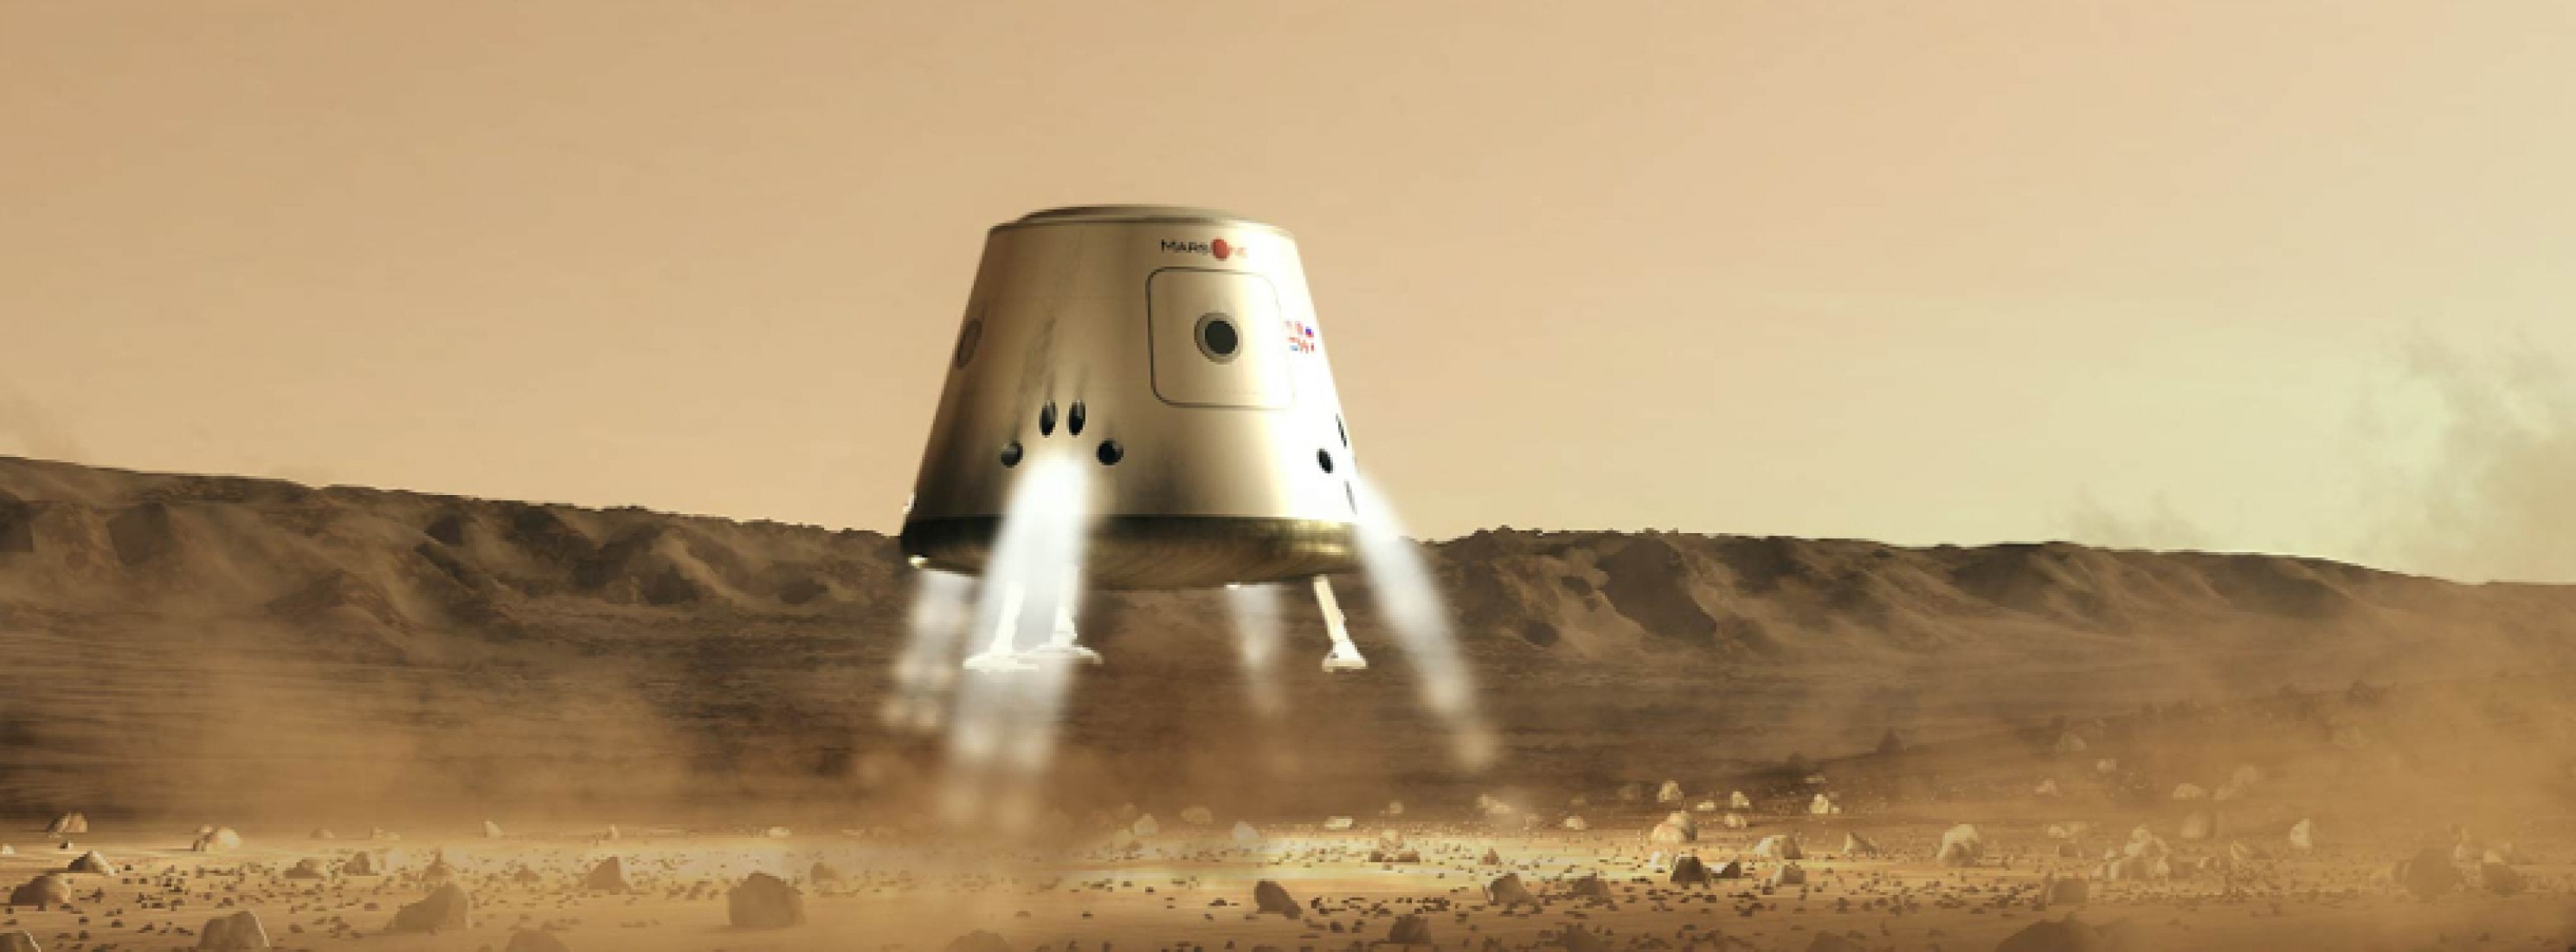 Mars One, human settlement. Image by Bryan Versteeg, Mars One.